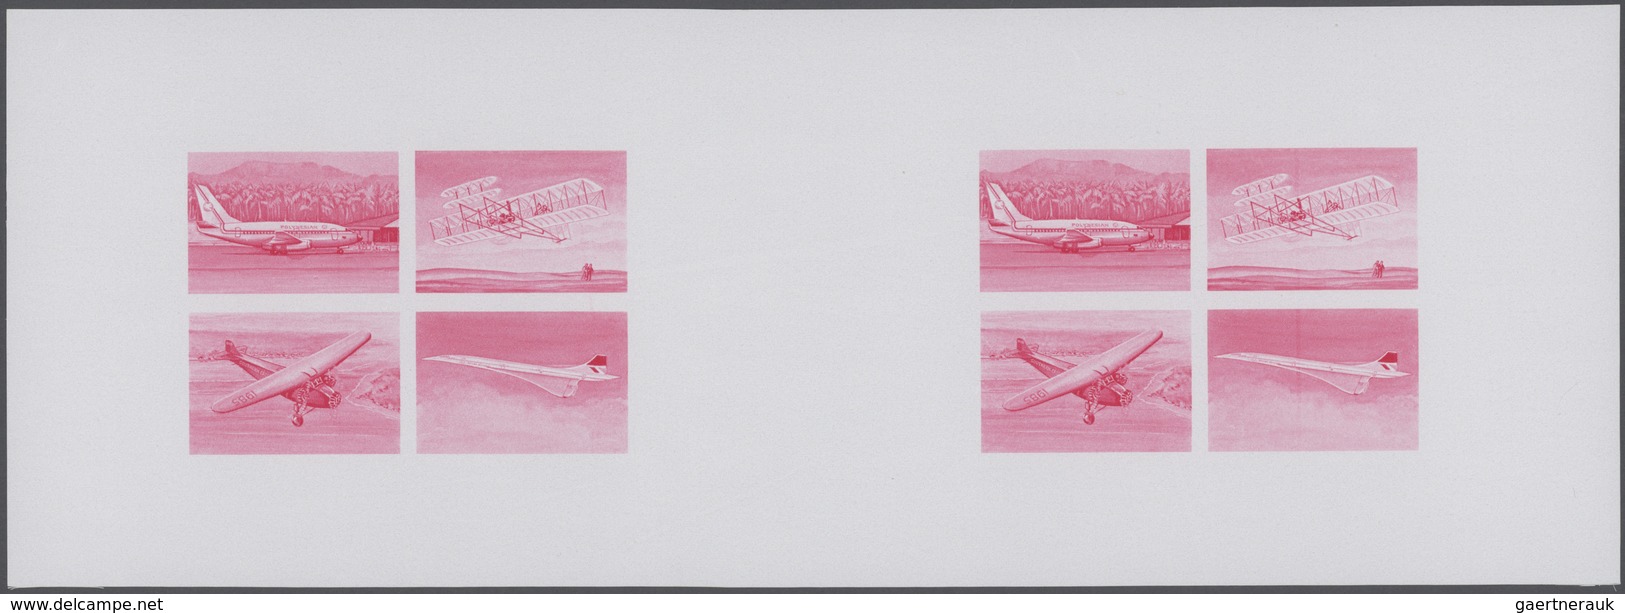 Thematik: Flugzeuge, Luftfahrt / airoplanes, aviation: 1978, Samoa. Progressive proofs set of sheets